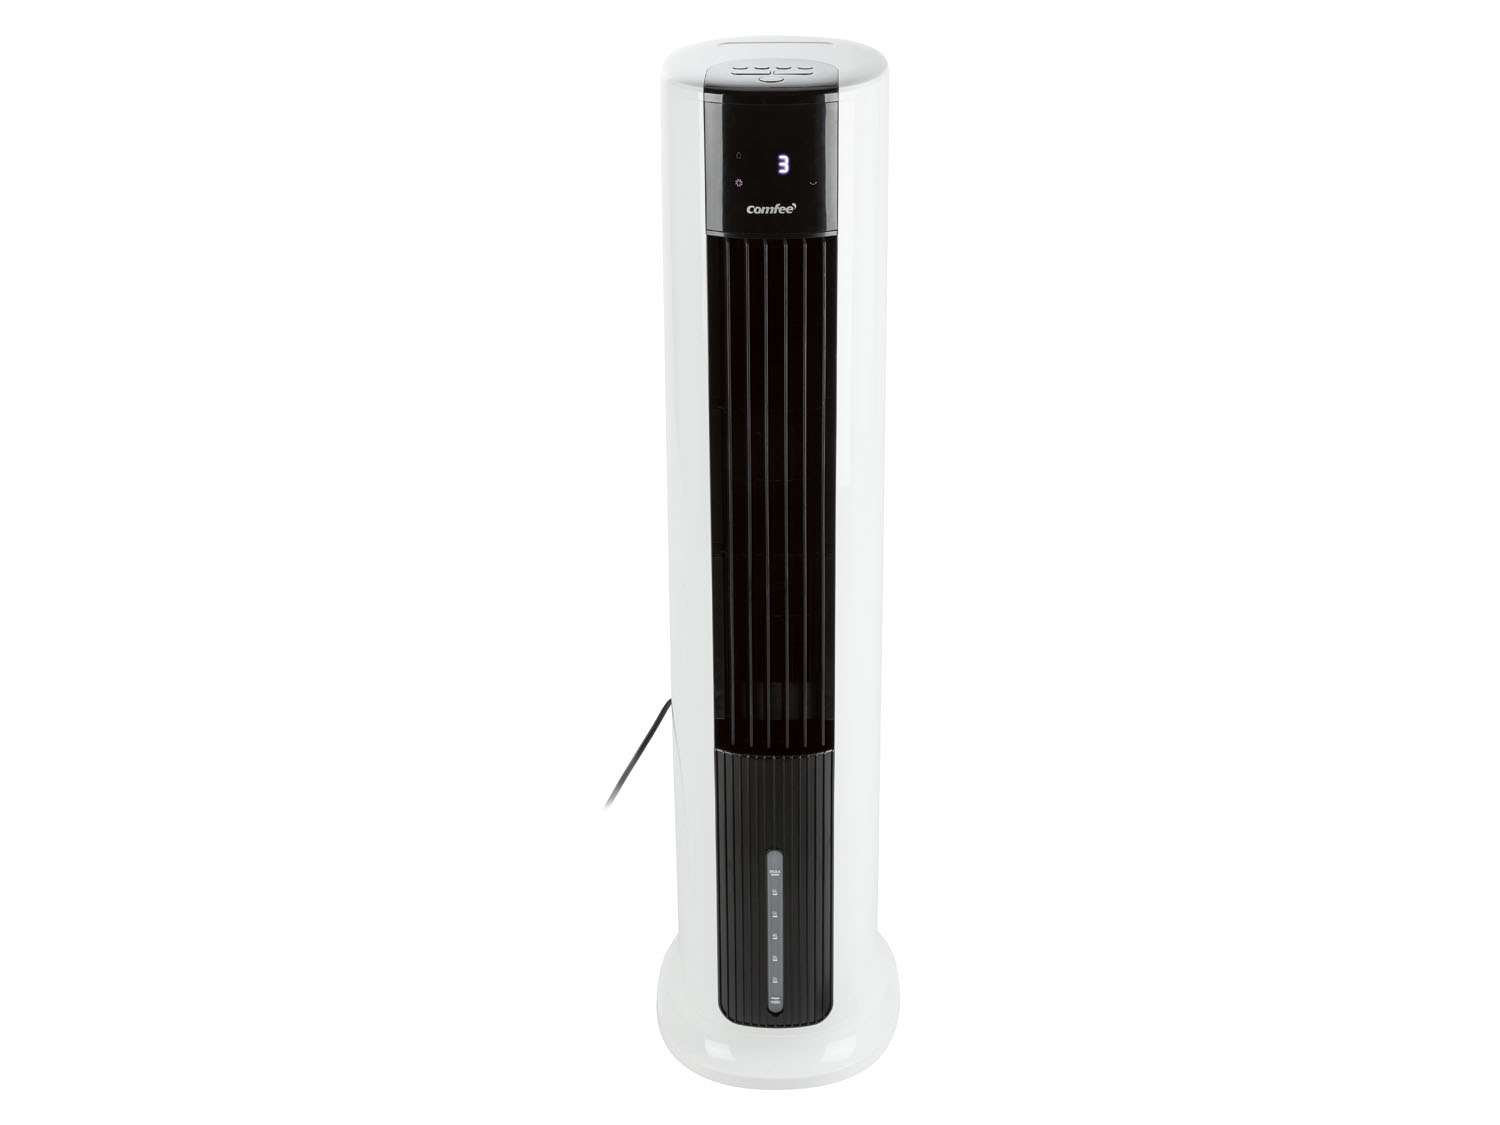 Comfee Turmventilator »Silent Air Cooler« H 105 cm oszillierend